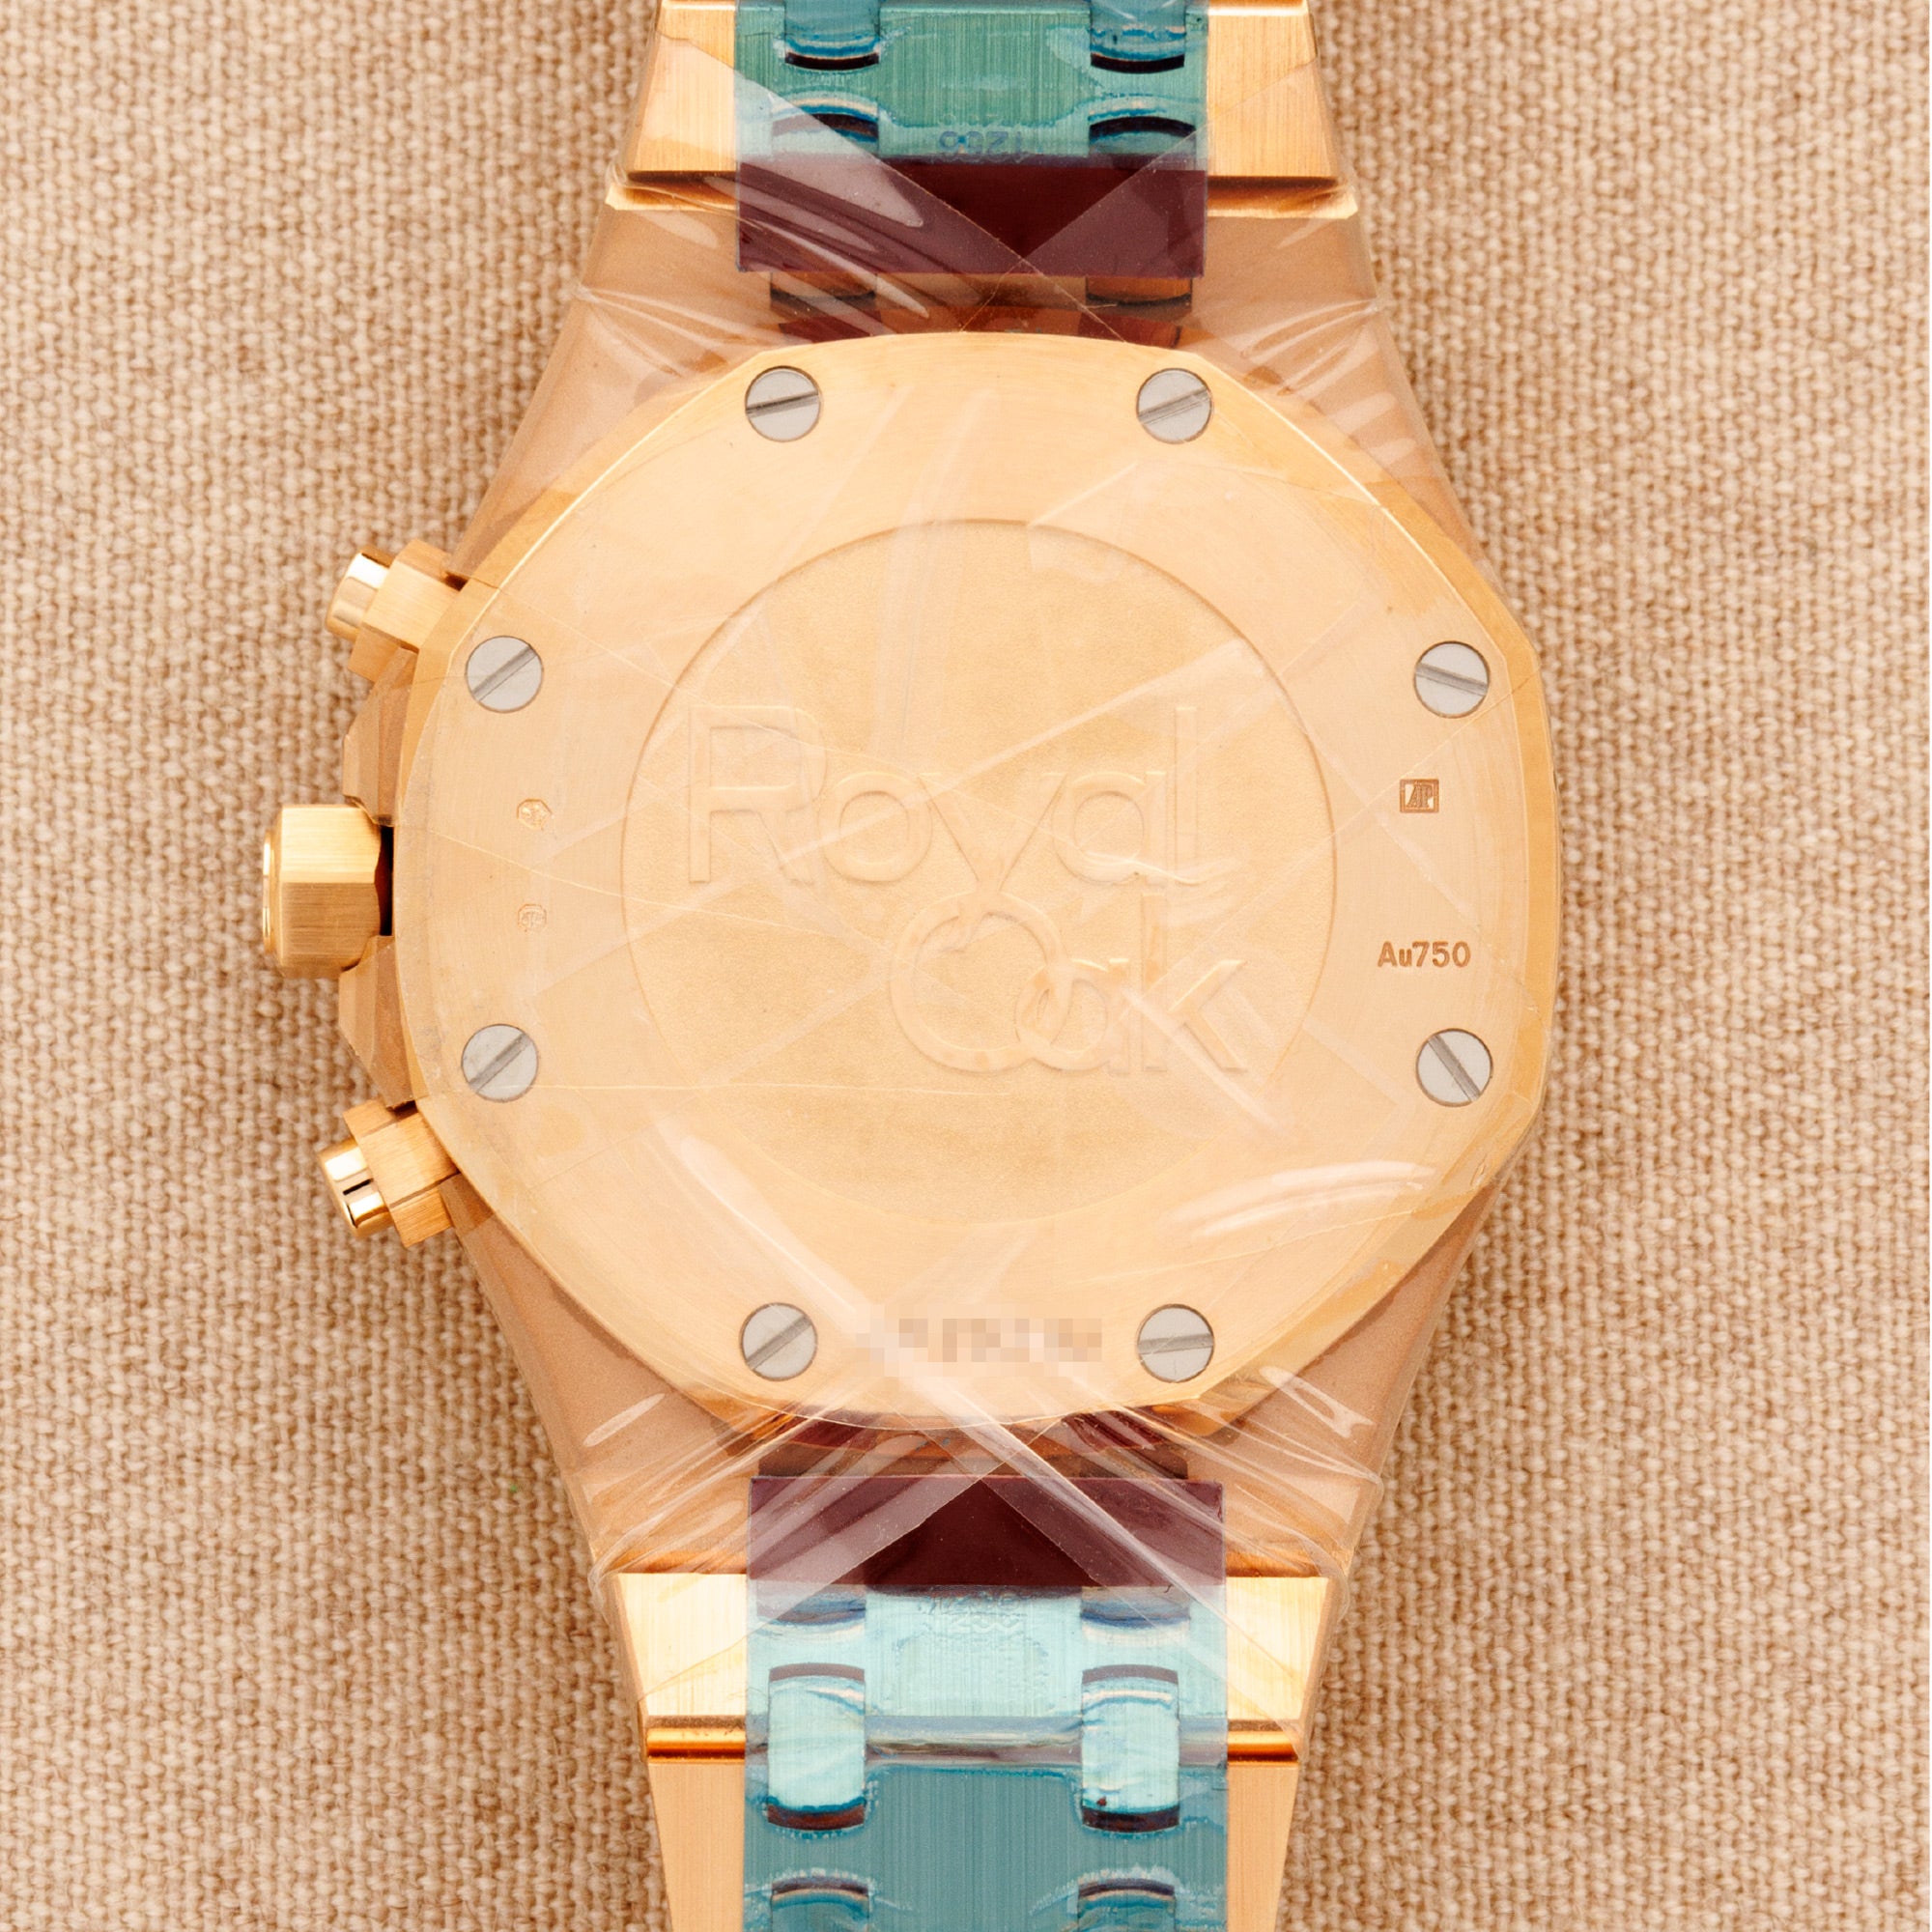 Audemars Piguet Rose Gold Royal Oak Chrono Diamond Watch Ref. 26315